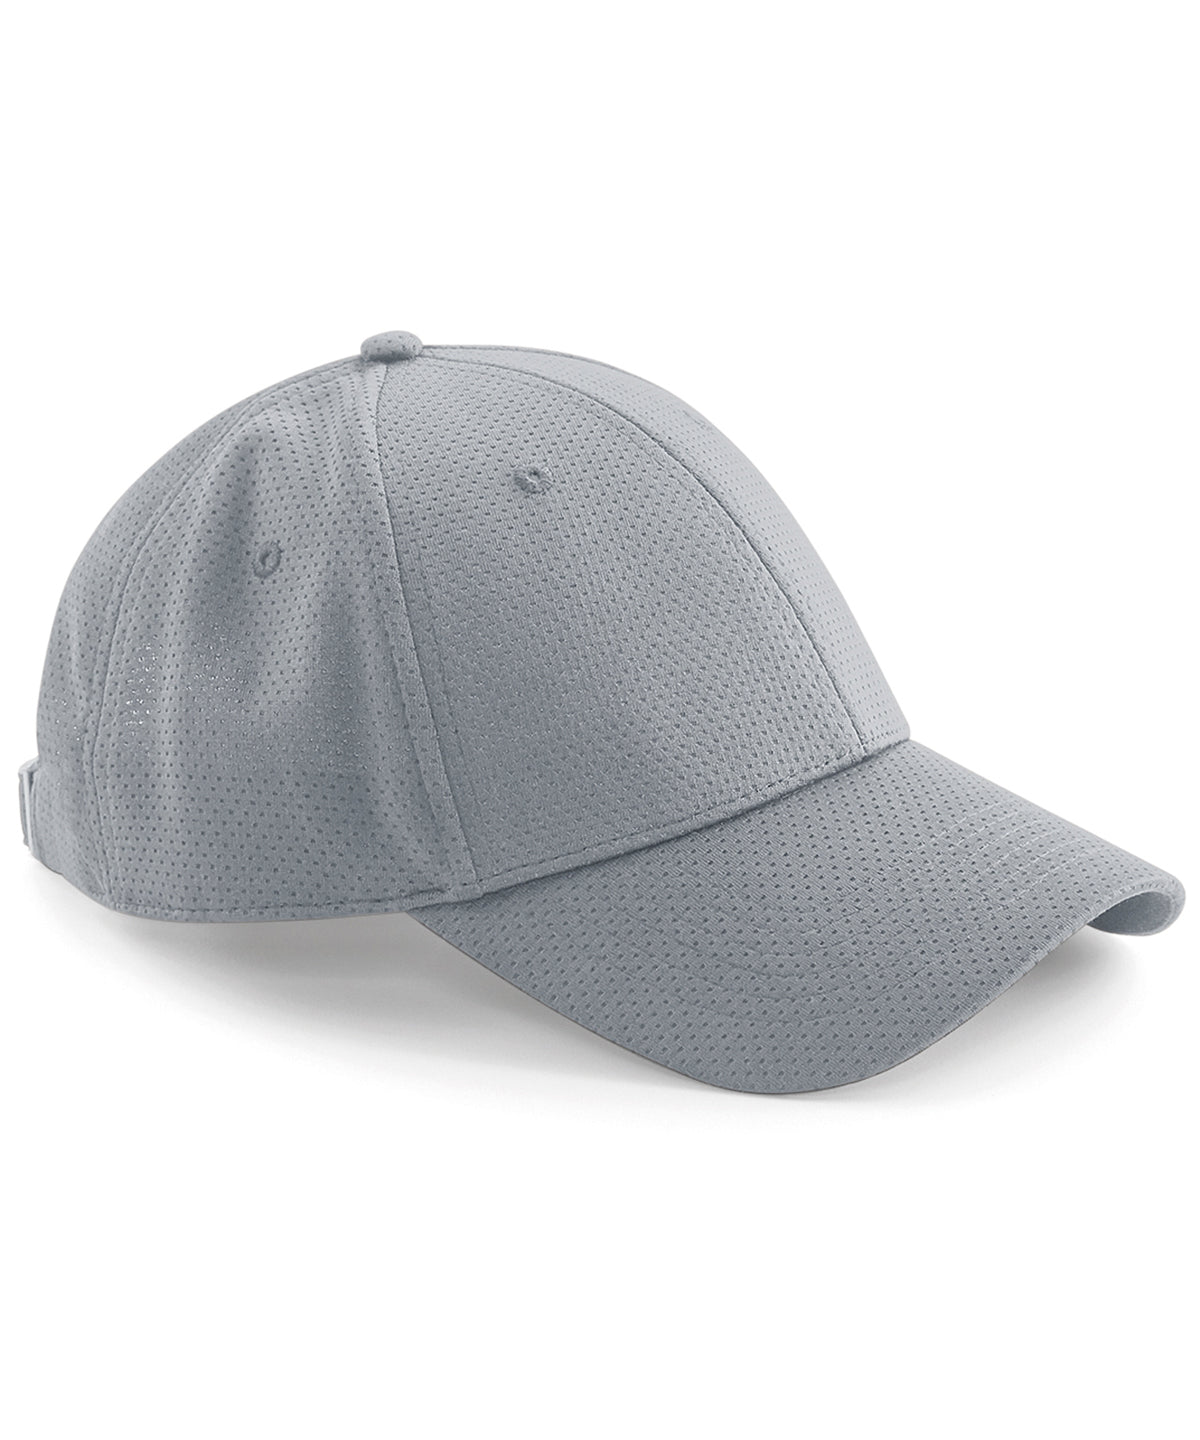 Personalised Caps - Light Grey Beechfield Air mesh 6-panel cap